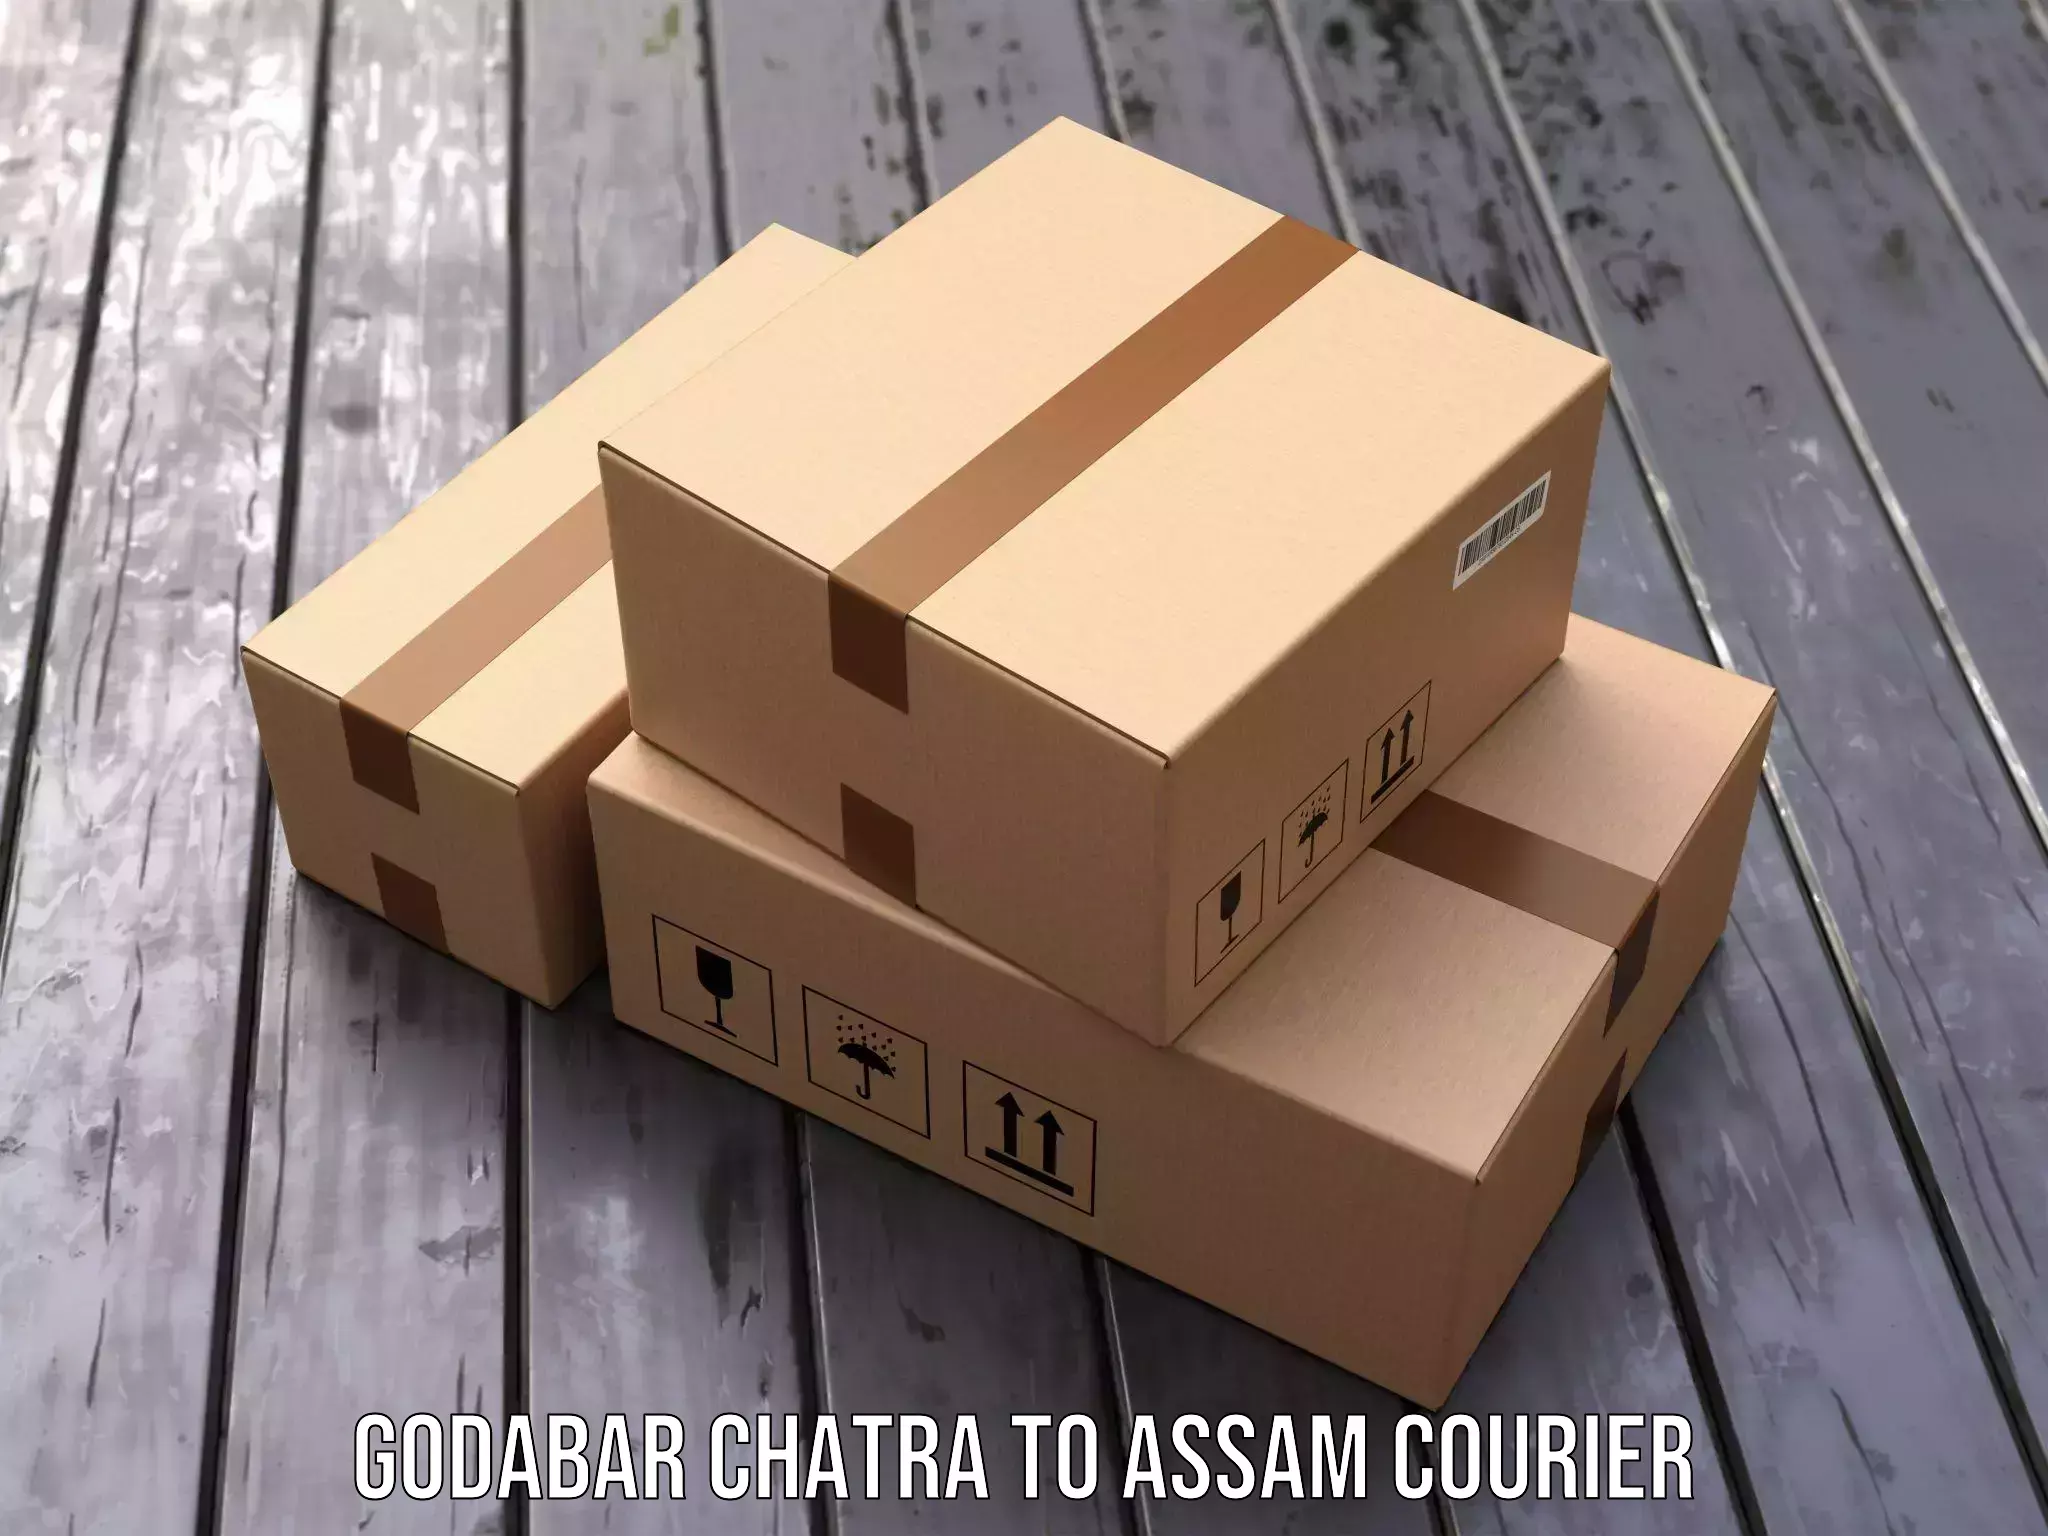 Professional parcel services Godabar Chatra to Dhupdhara